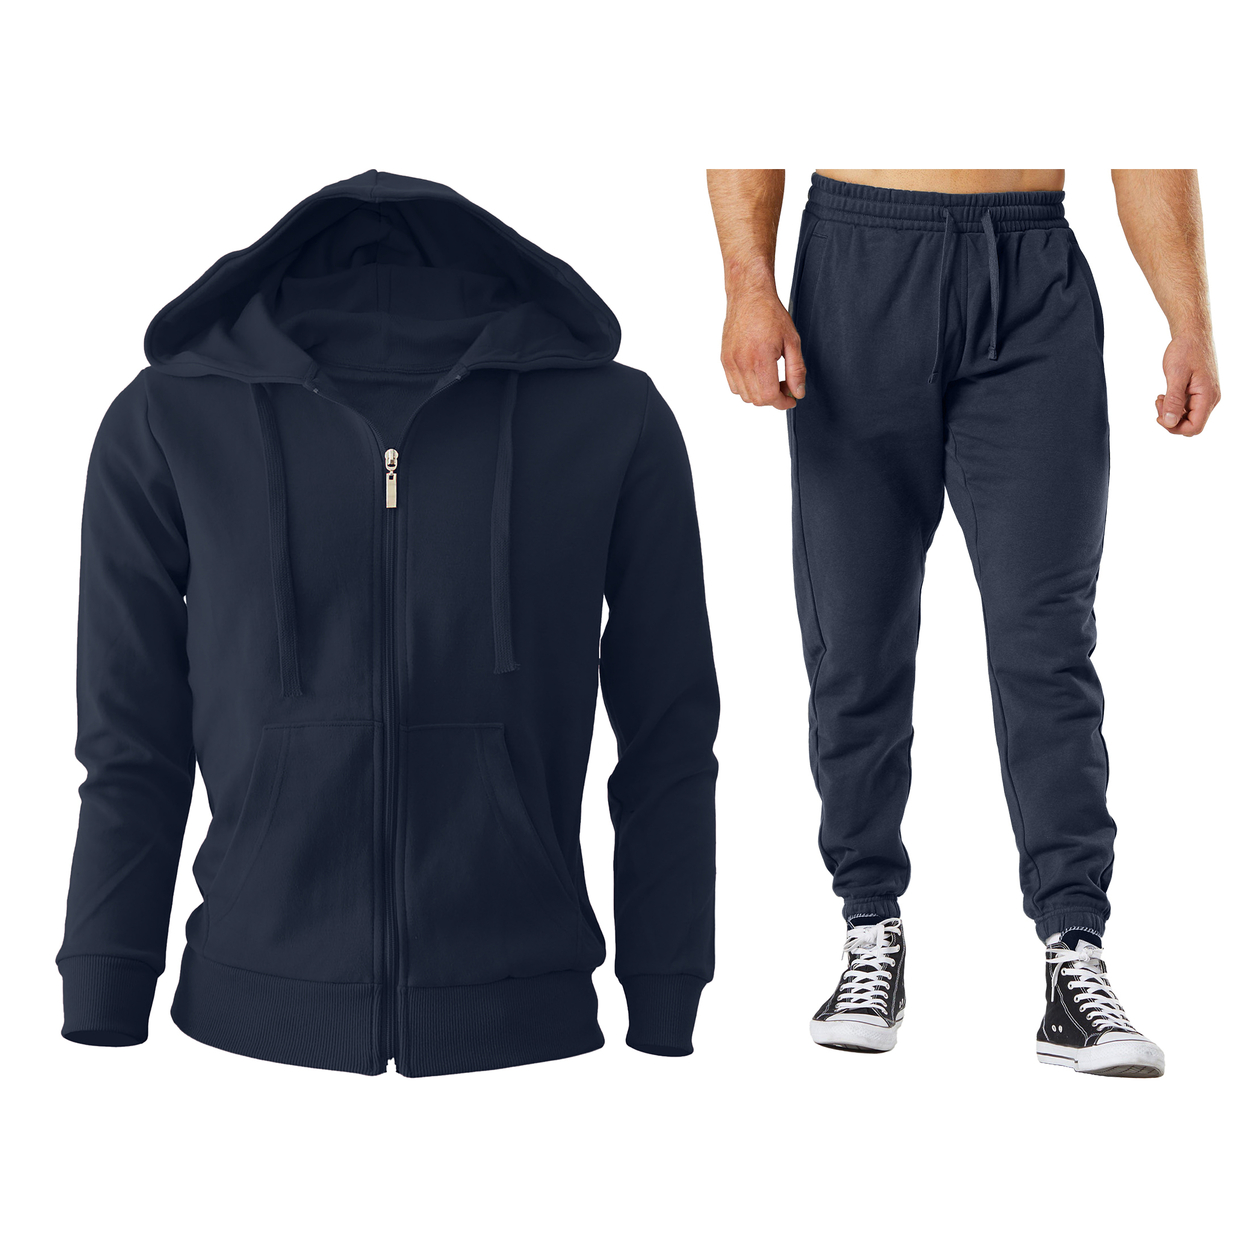 2/4-Piece: Men's Winter Warm Cozy Athletic Multi-Pockets BIG & TALL Sweatsuit Set - Charcoal, 1, X-large